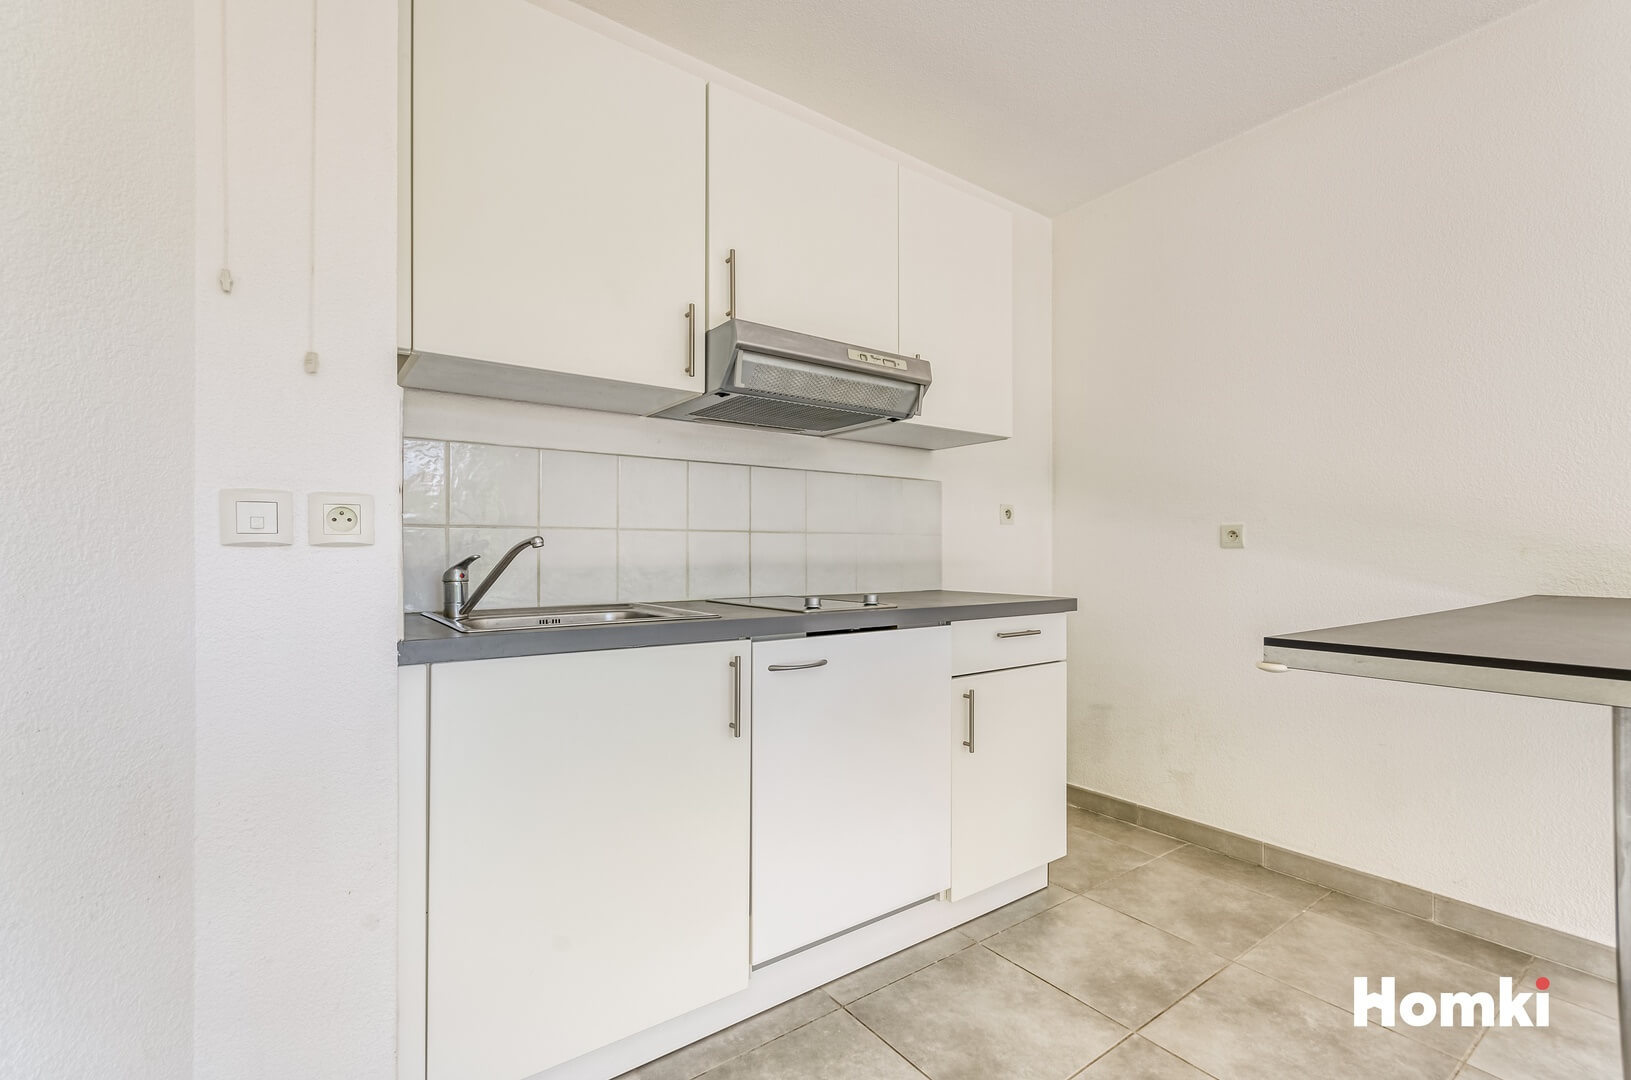 Homki - Vente Appartement  de 39.0 m² à Gardanne 13120